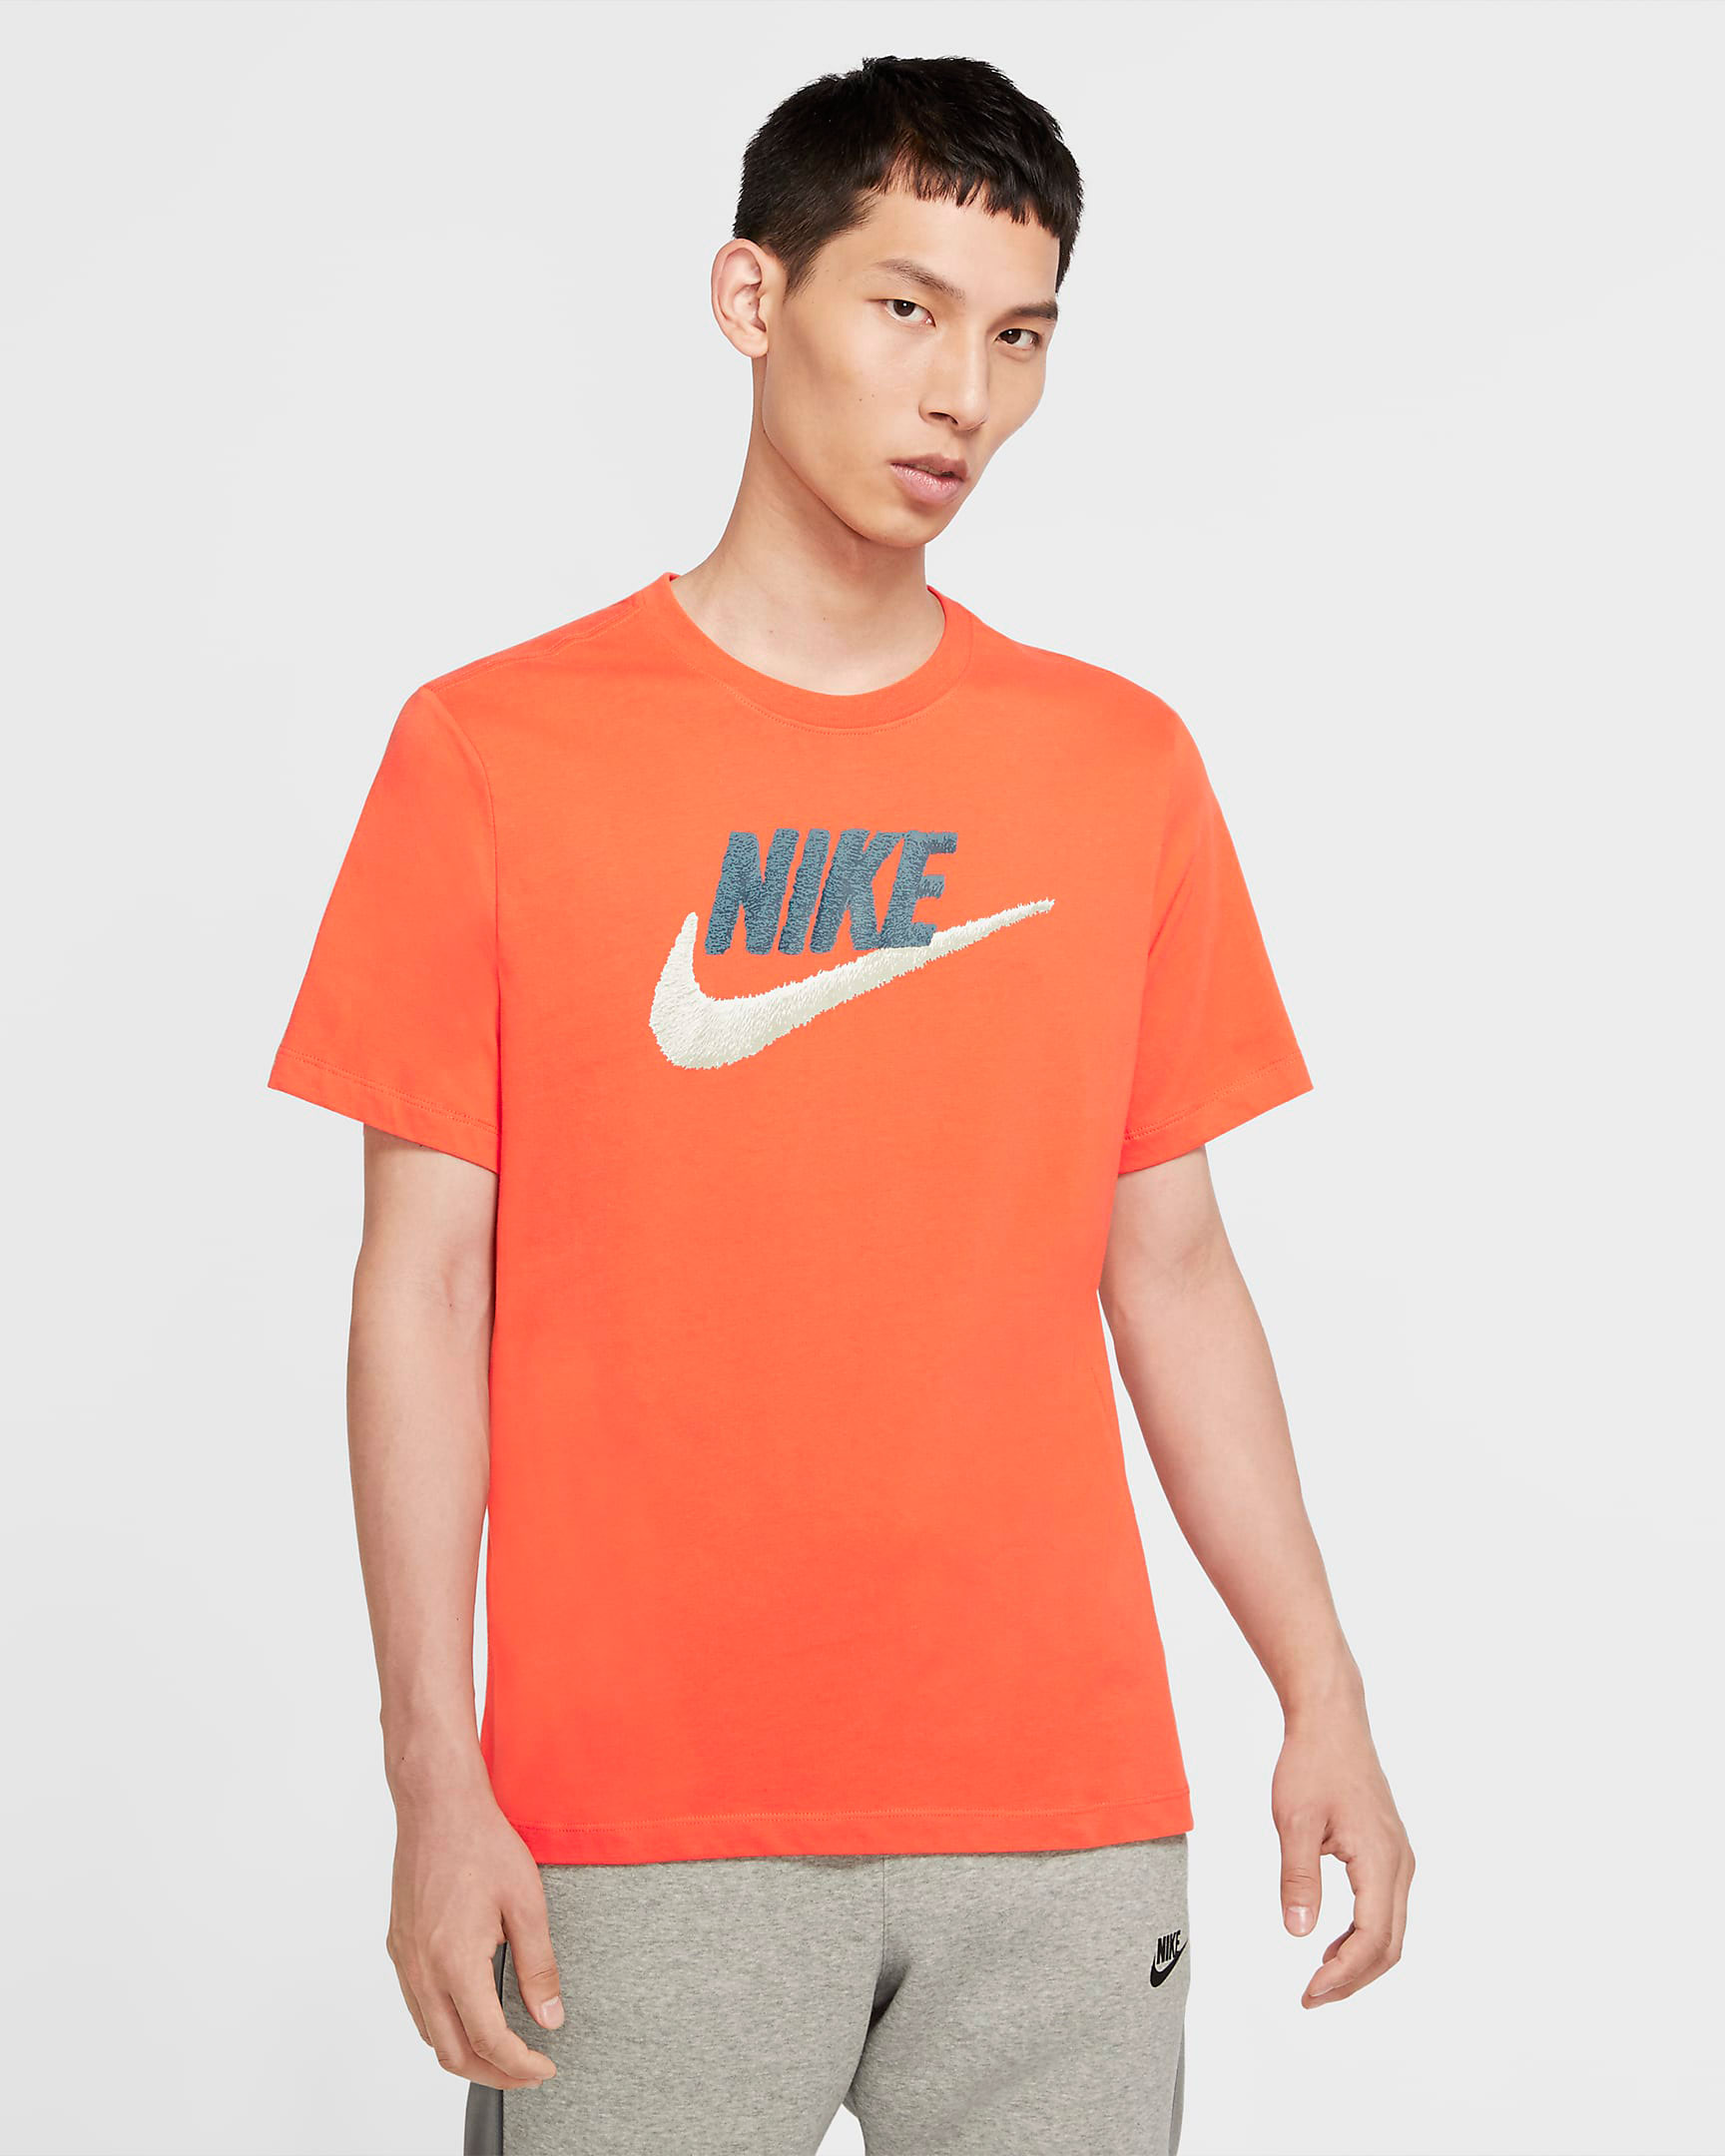 nike-logo-orange-shirt